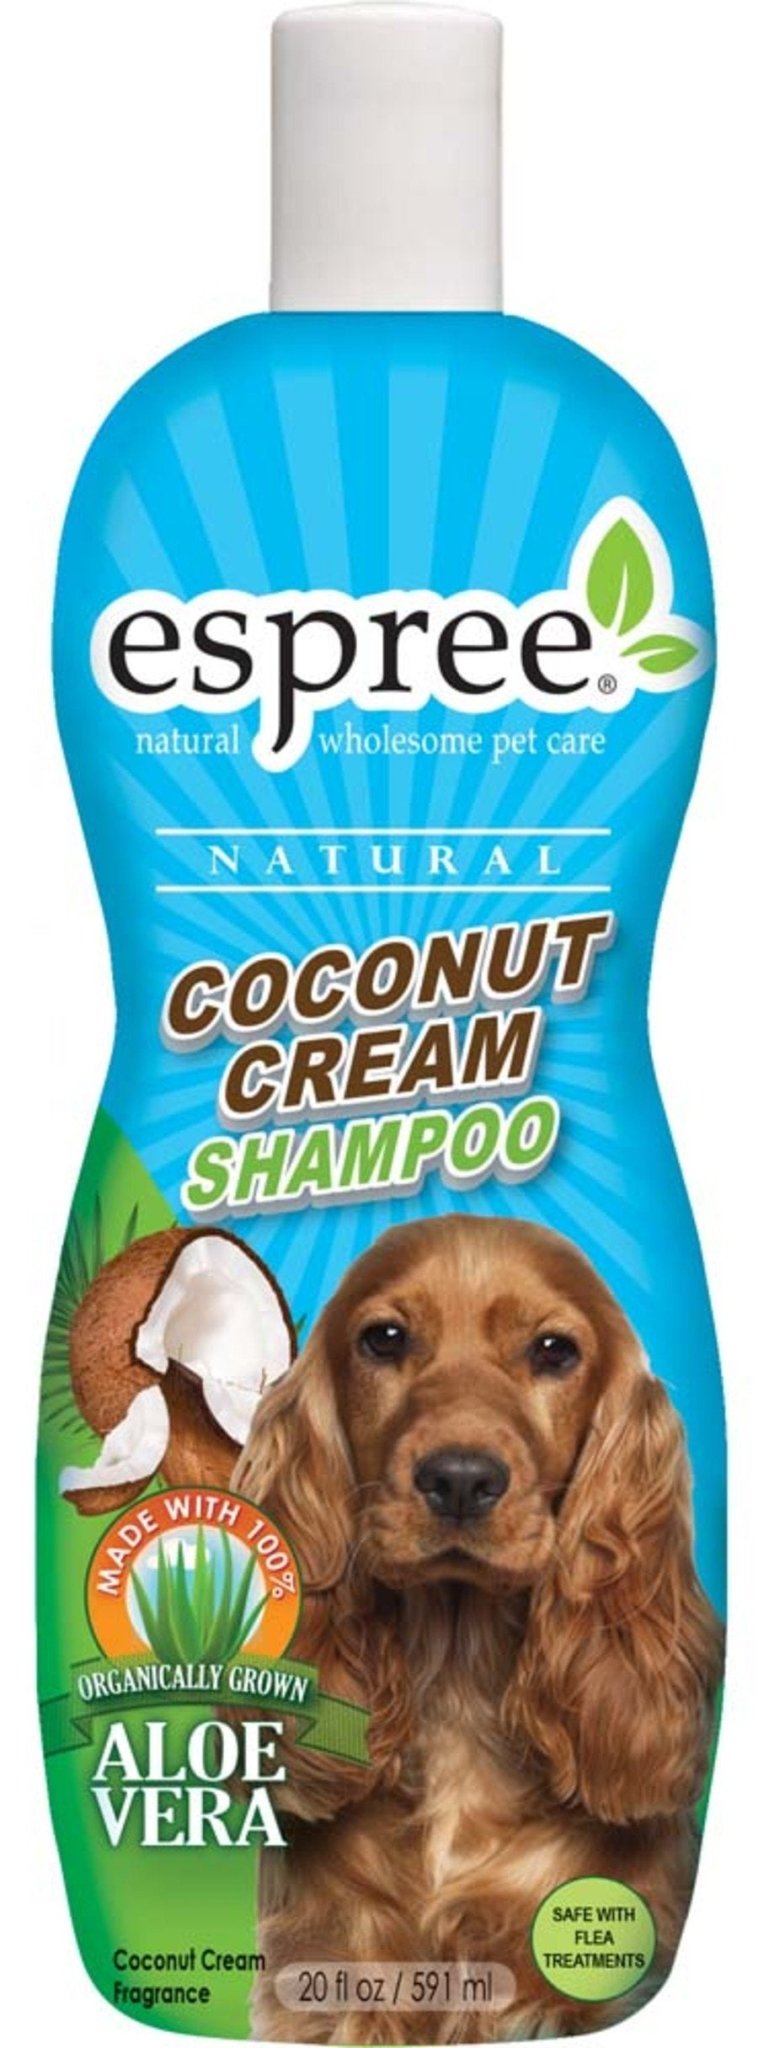 Espree Natural Coconut Cream Dog Shampoo 20 fl oz - Kwik Pets